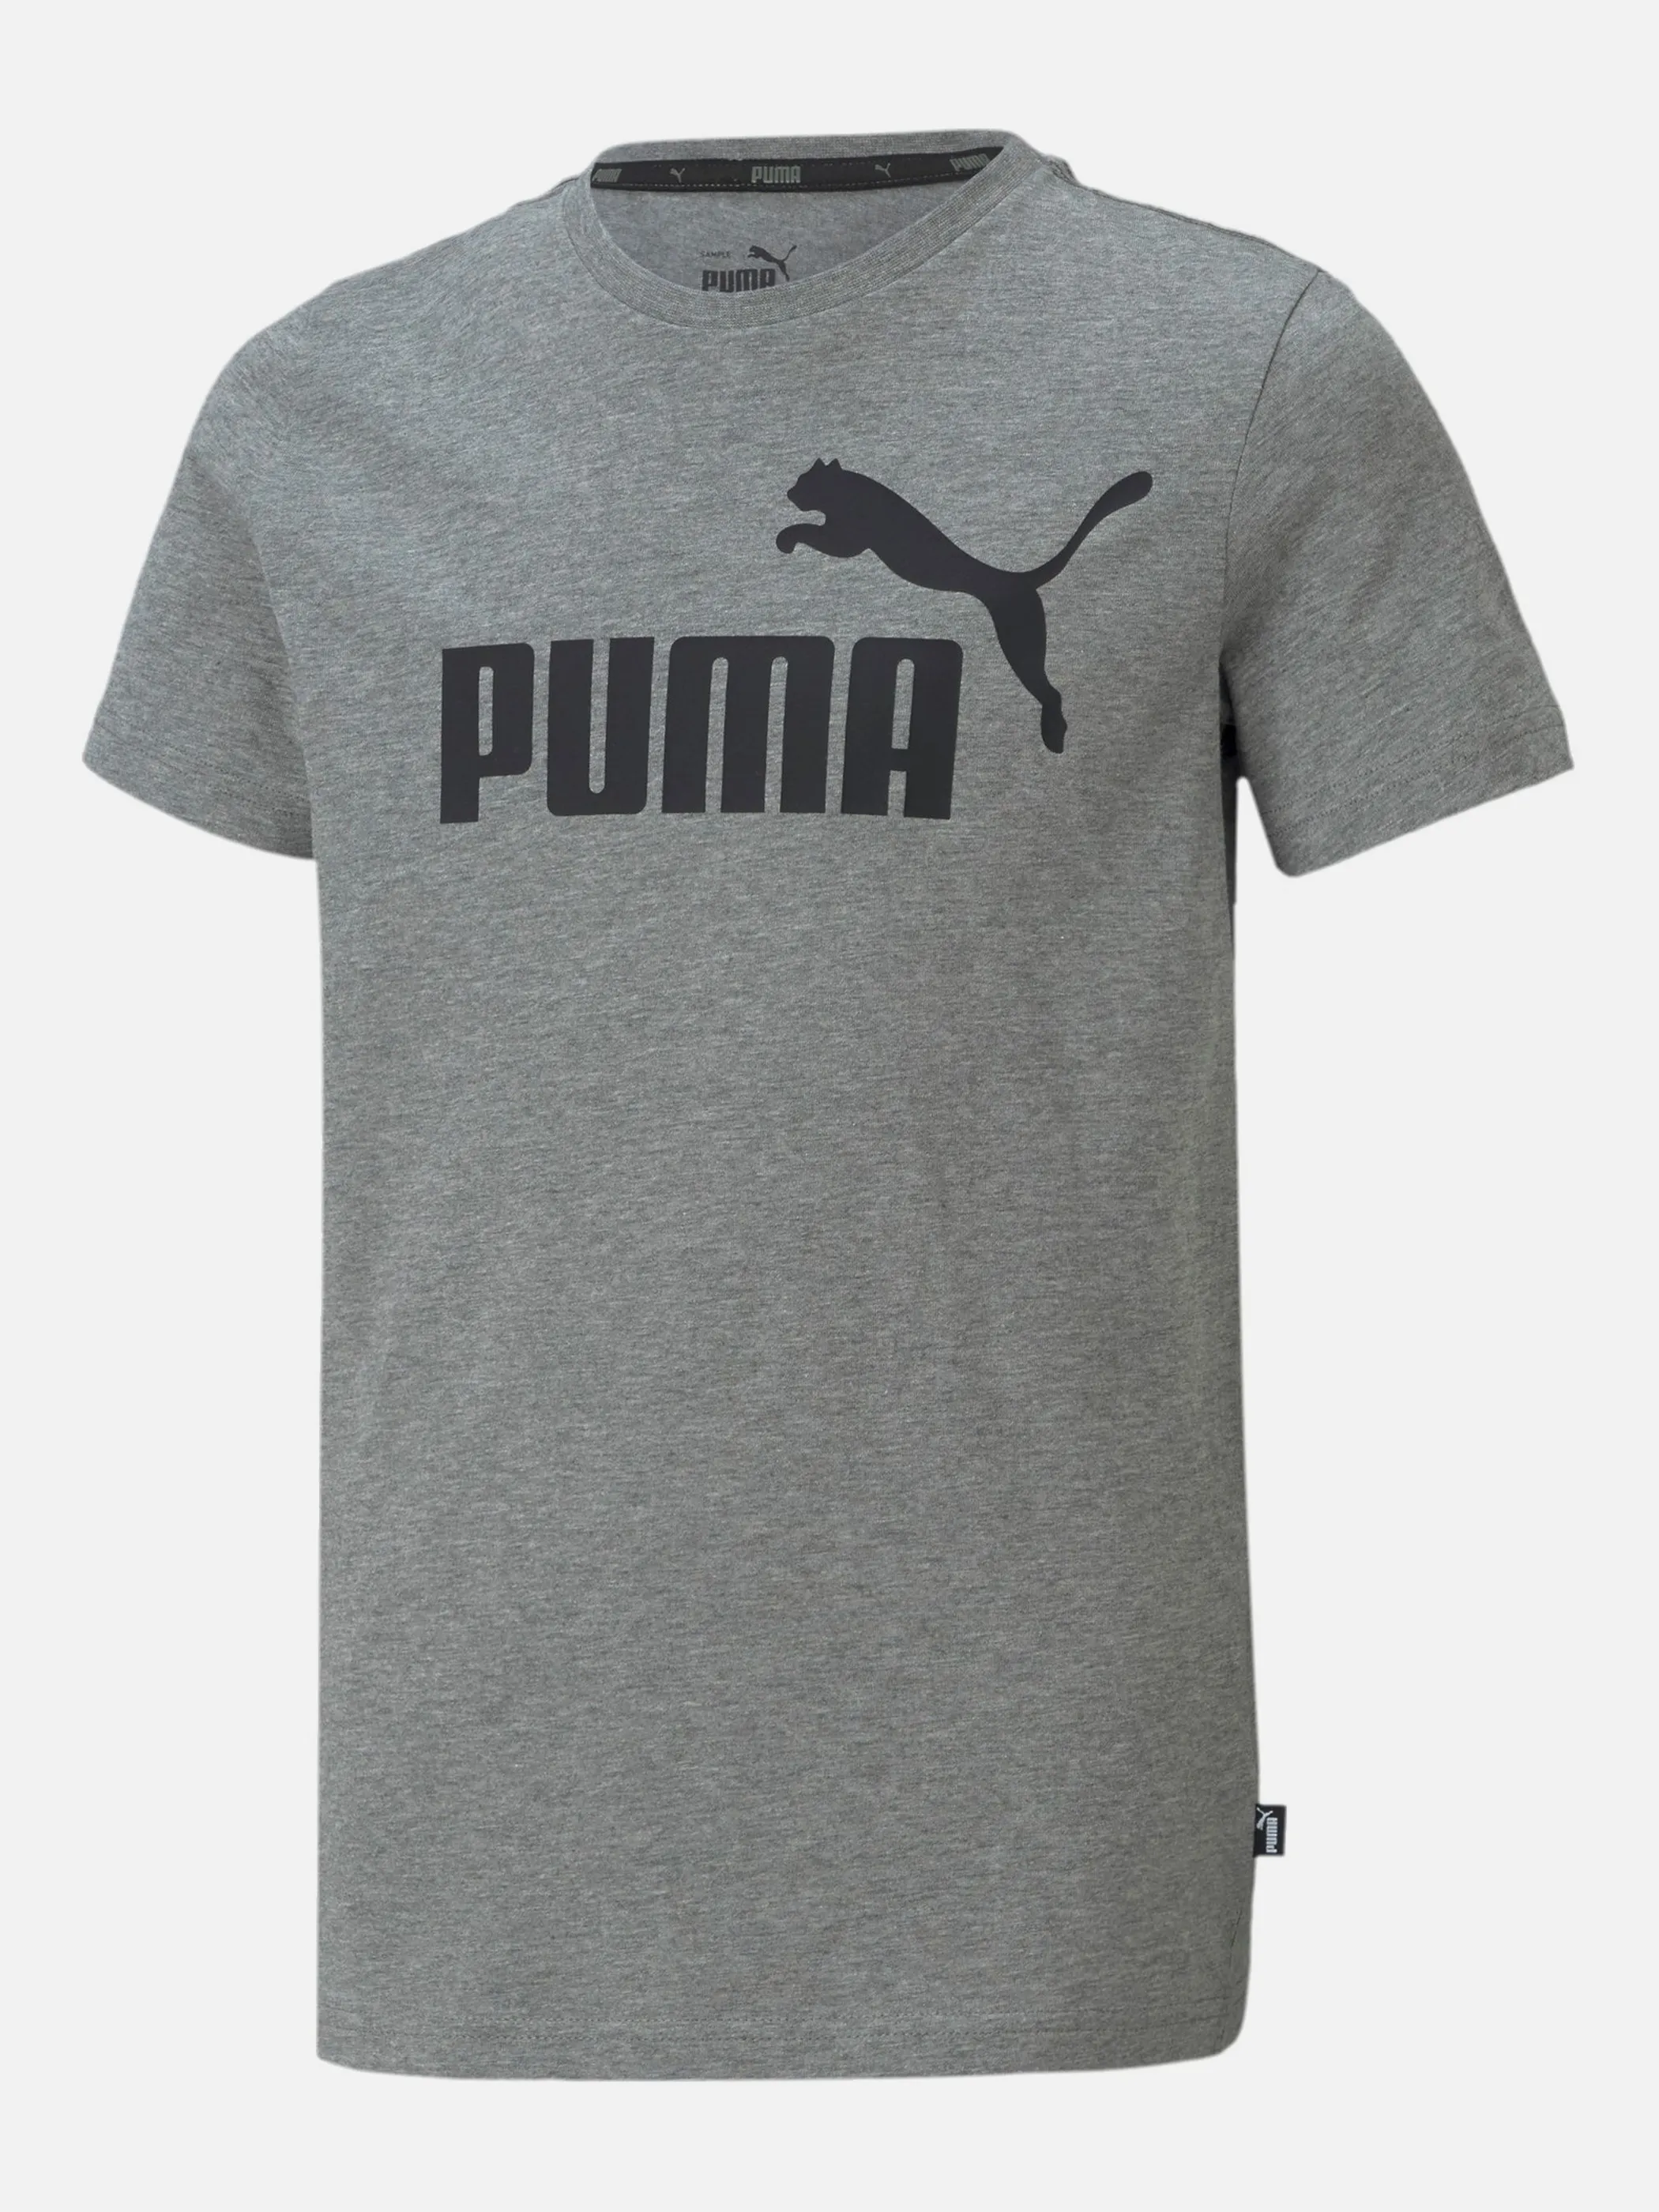 Puma 586960 Kn-T-Shirt mit Logo Grau 862323 03 1